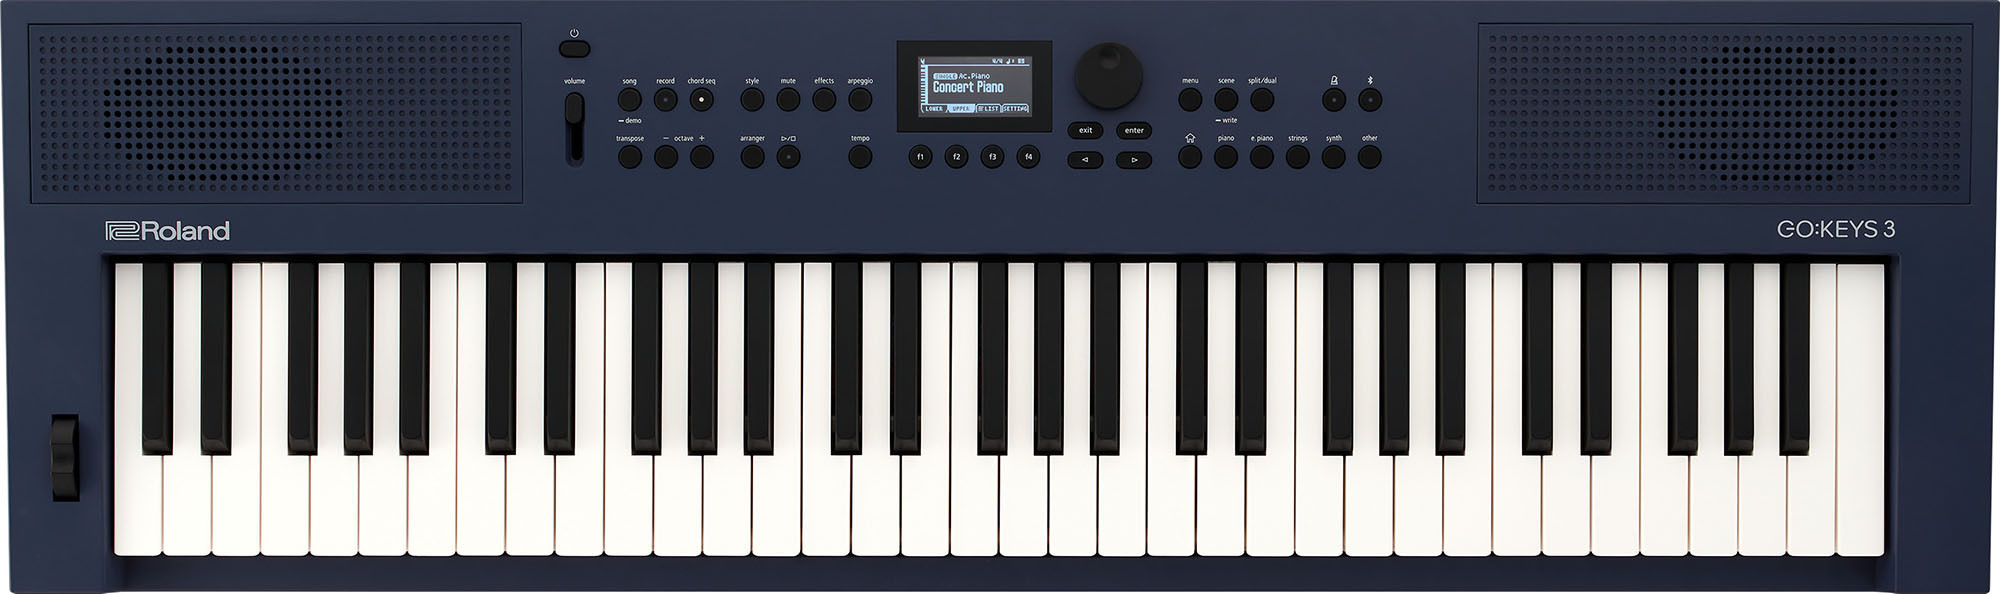 Roland Go:keys-3-mu - Entertainer Keyboard - Main picture